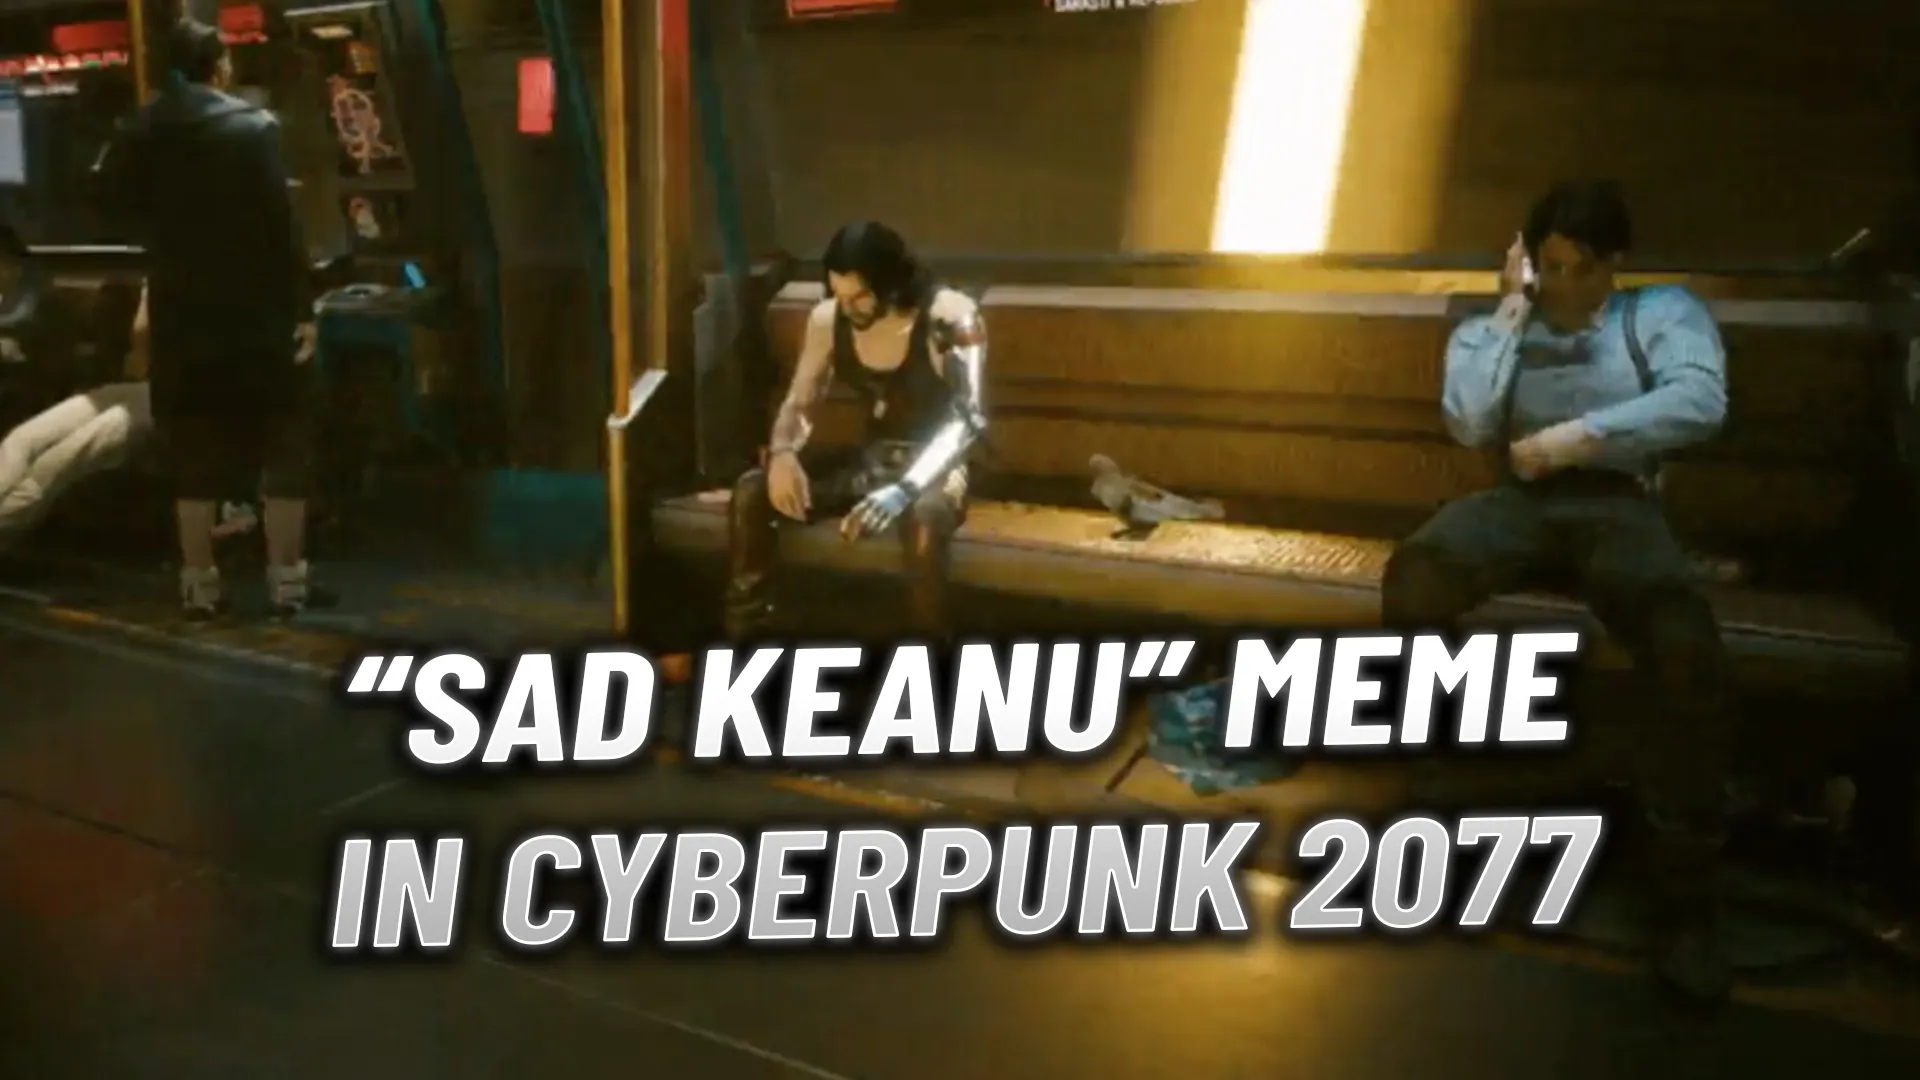 Cyberpunk 2077 Update 2.1 Added The 'Sad Keanu' Meme To The Game